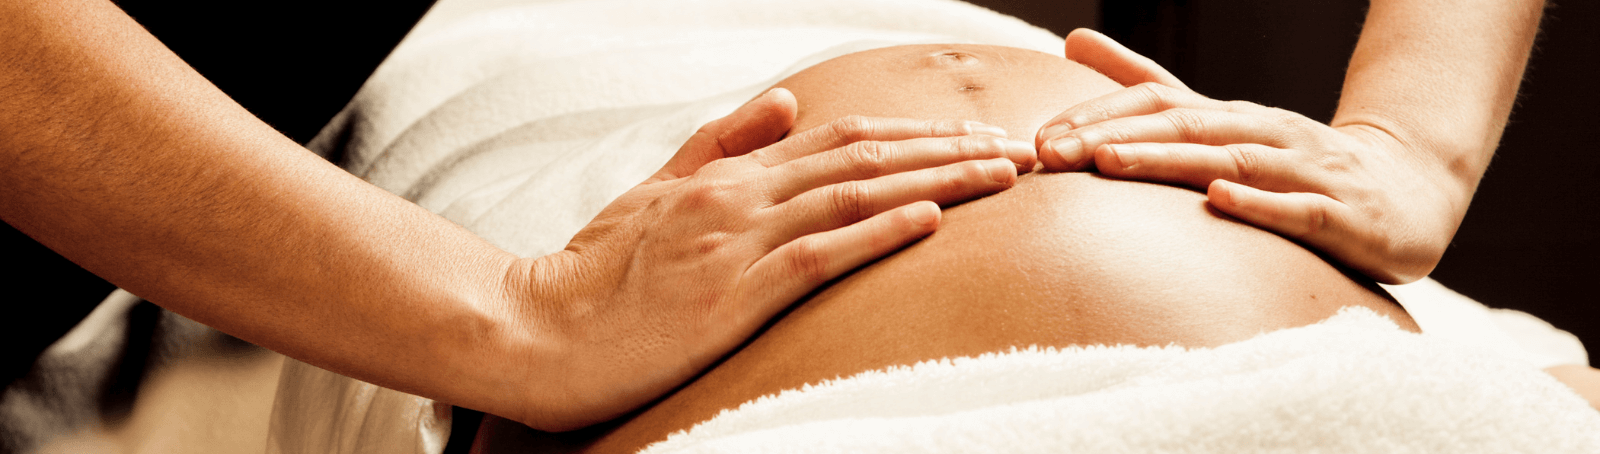 Thai Massage for Pregnancy: Safe and Effective Techniques